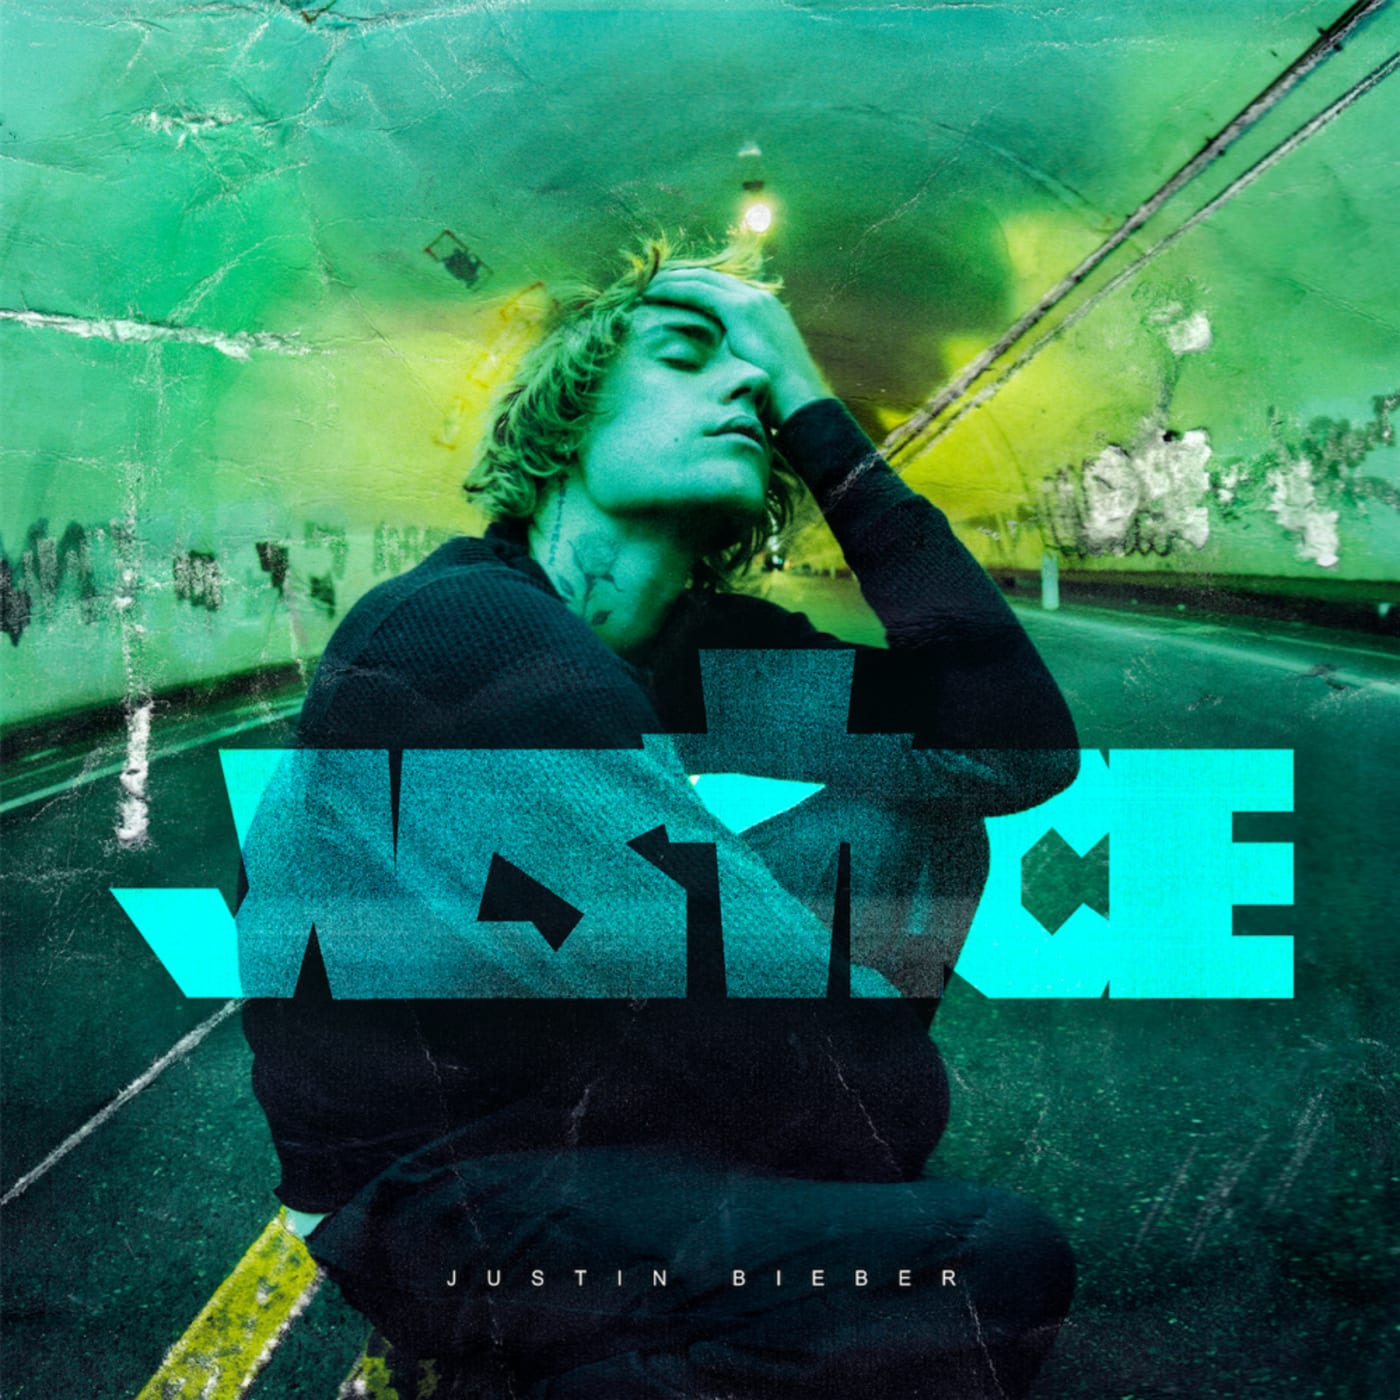 Justin Bieber, 'Justice' cover art.